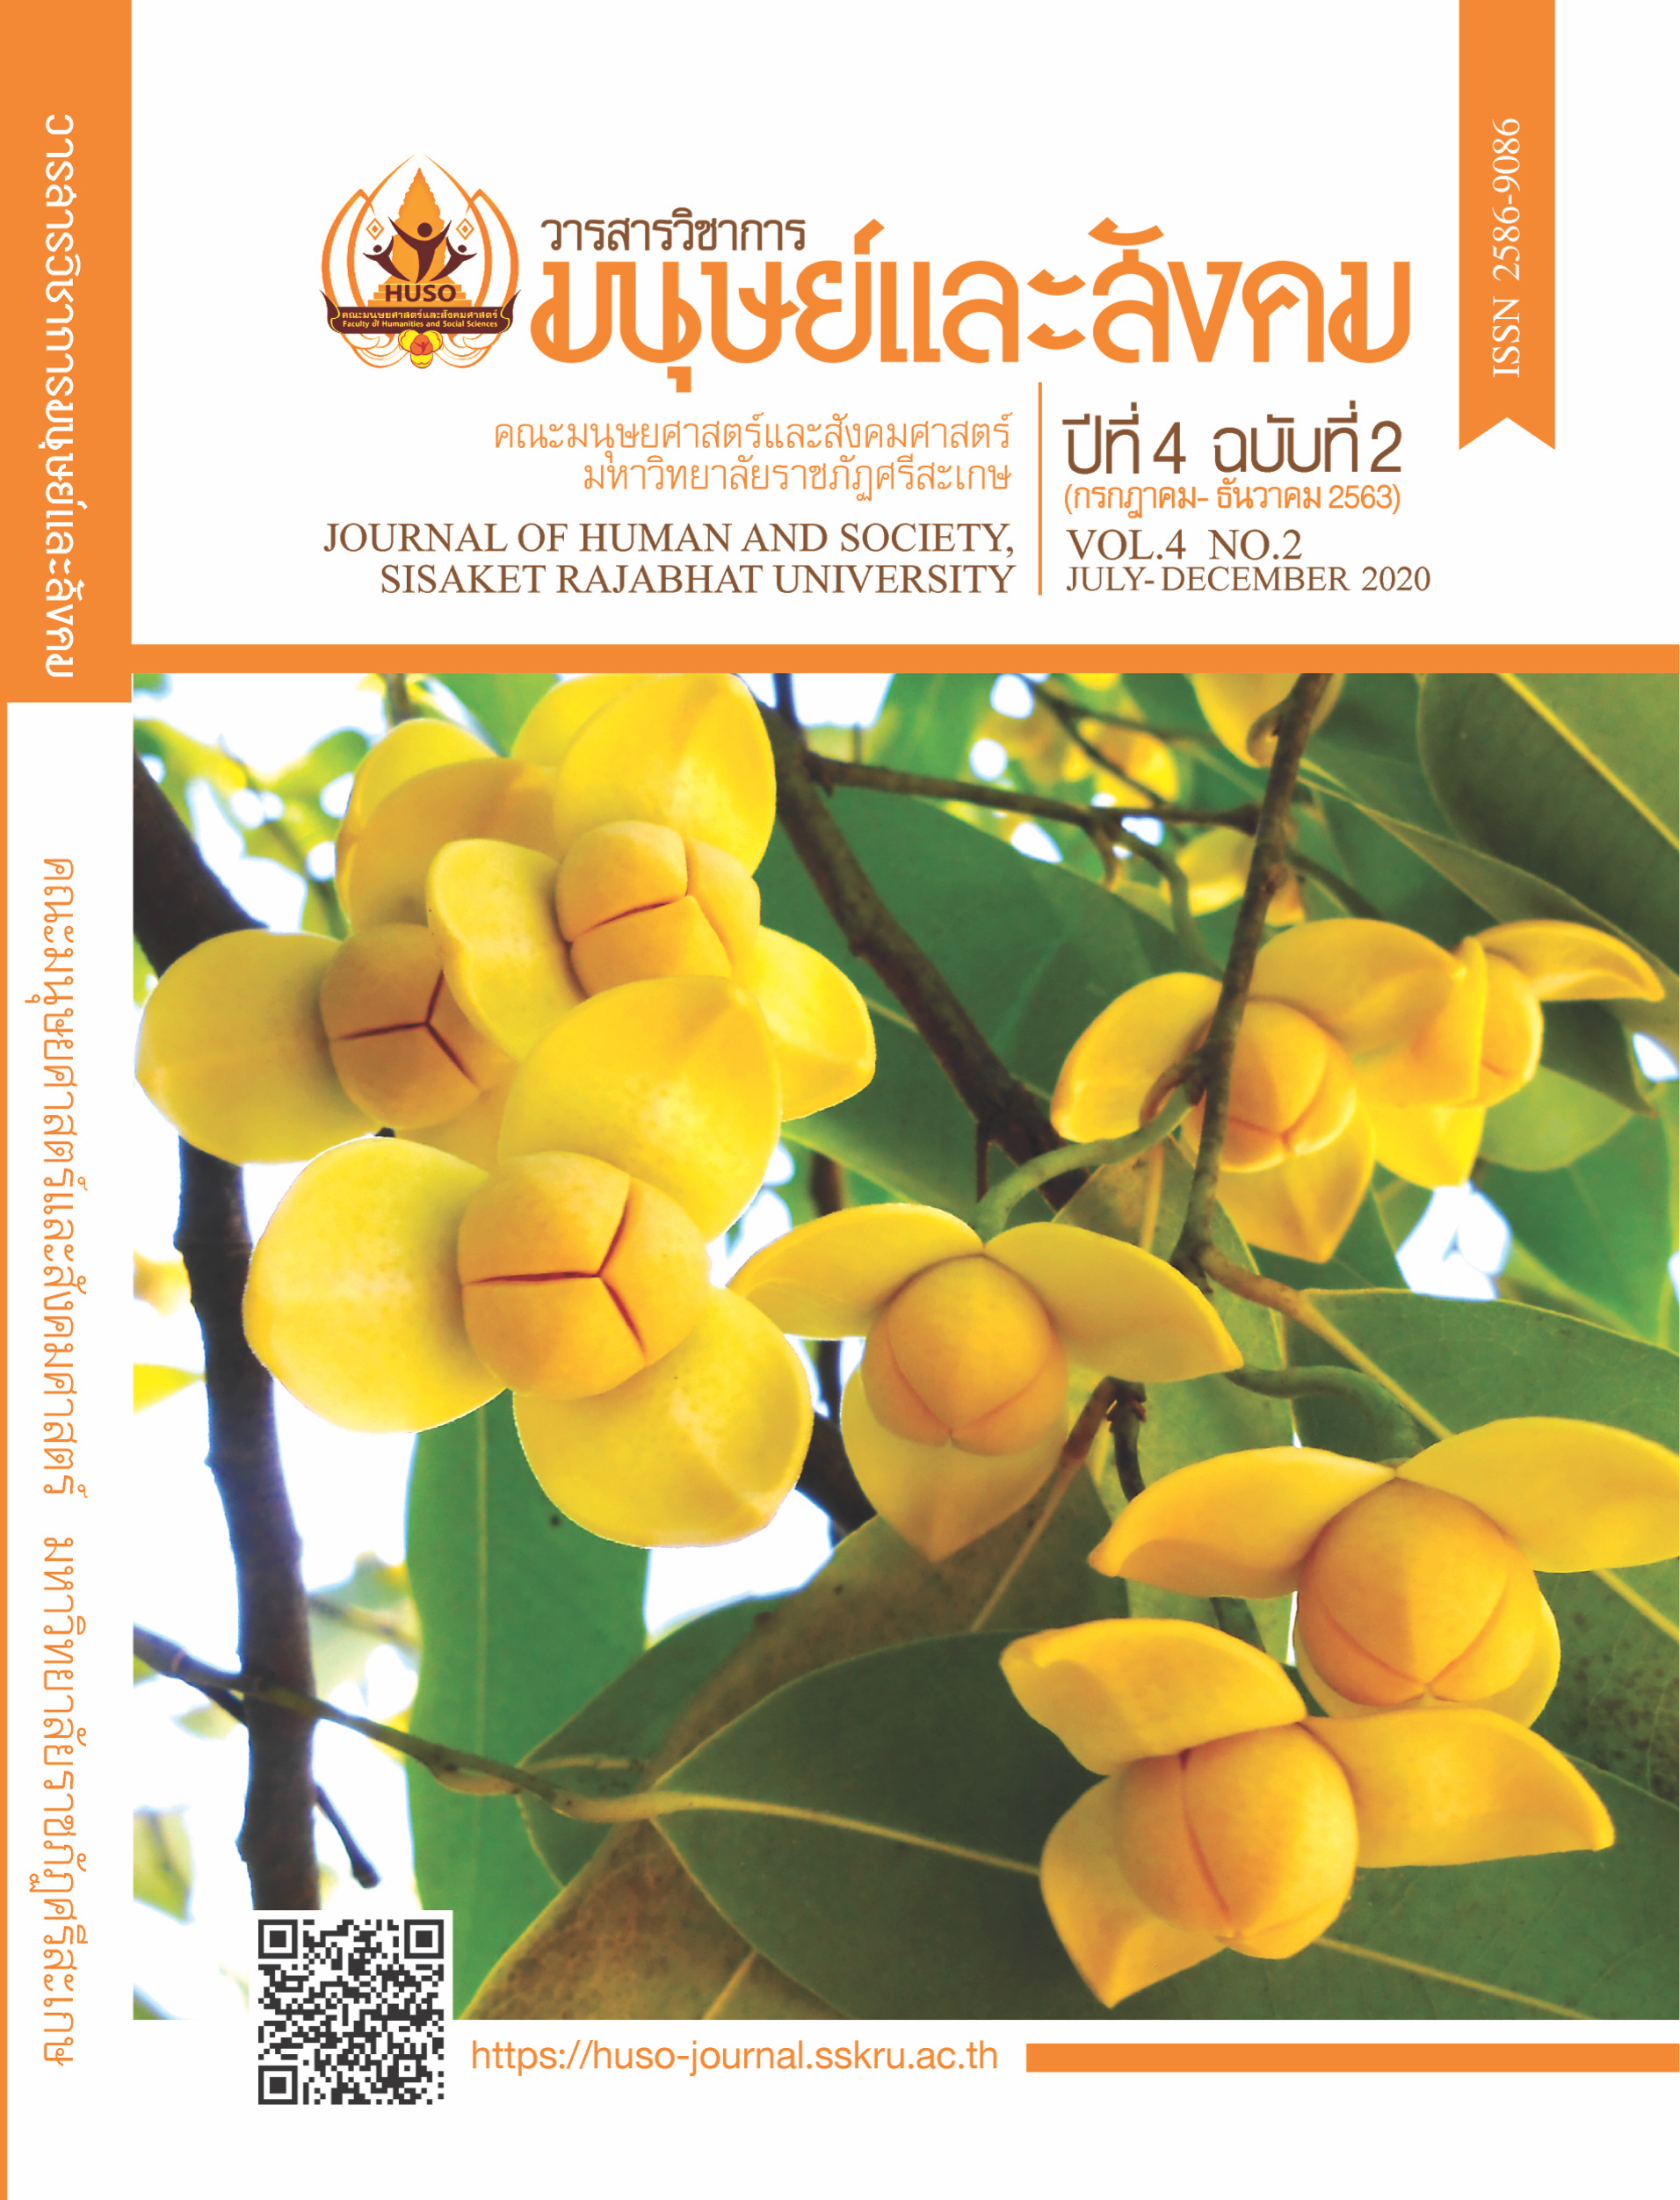 					View Vol. 4 No. 2 (2020): Journal of Human and Society, Sisaket Rajabhat University
				